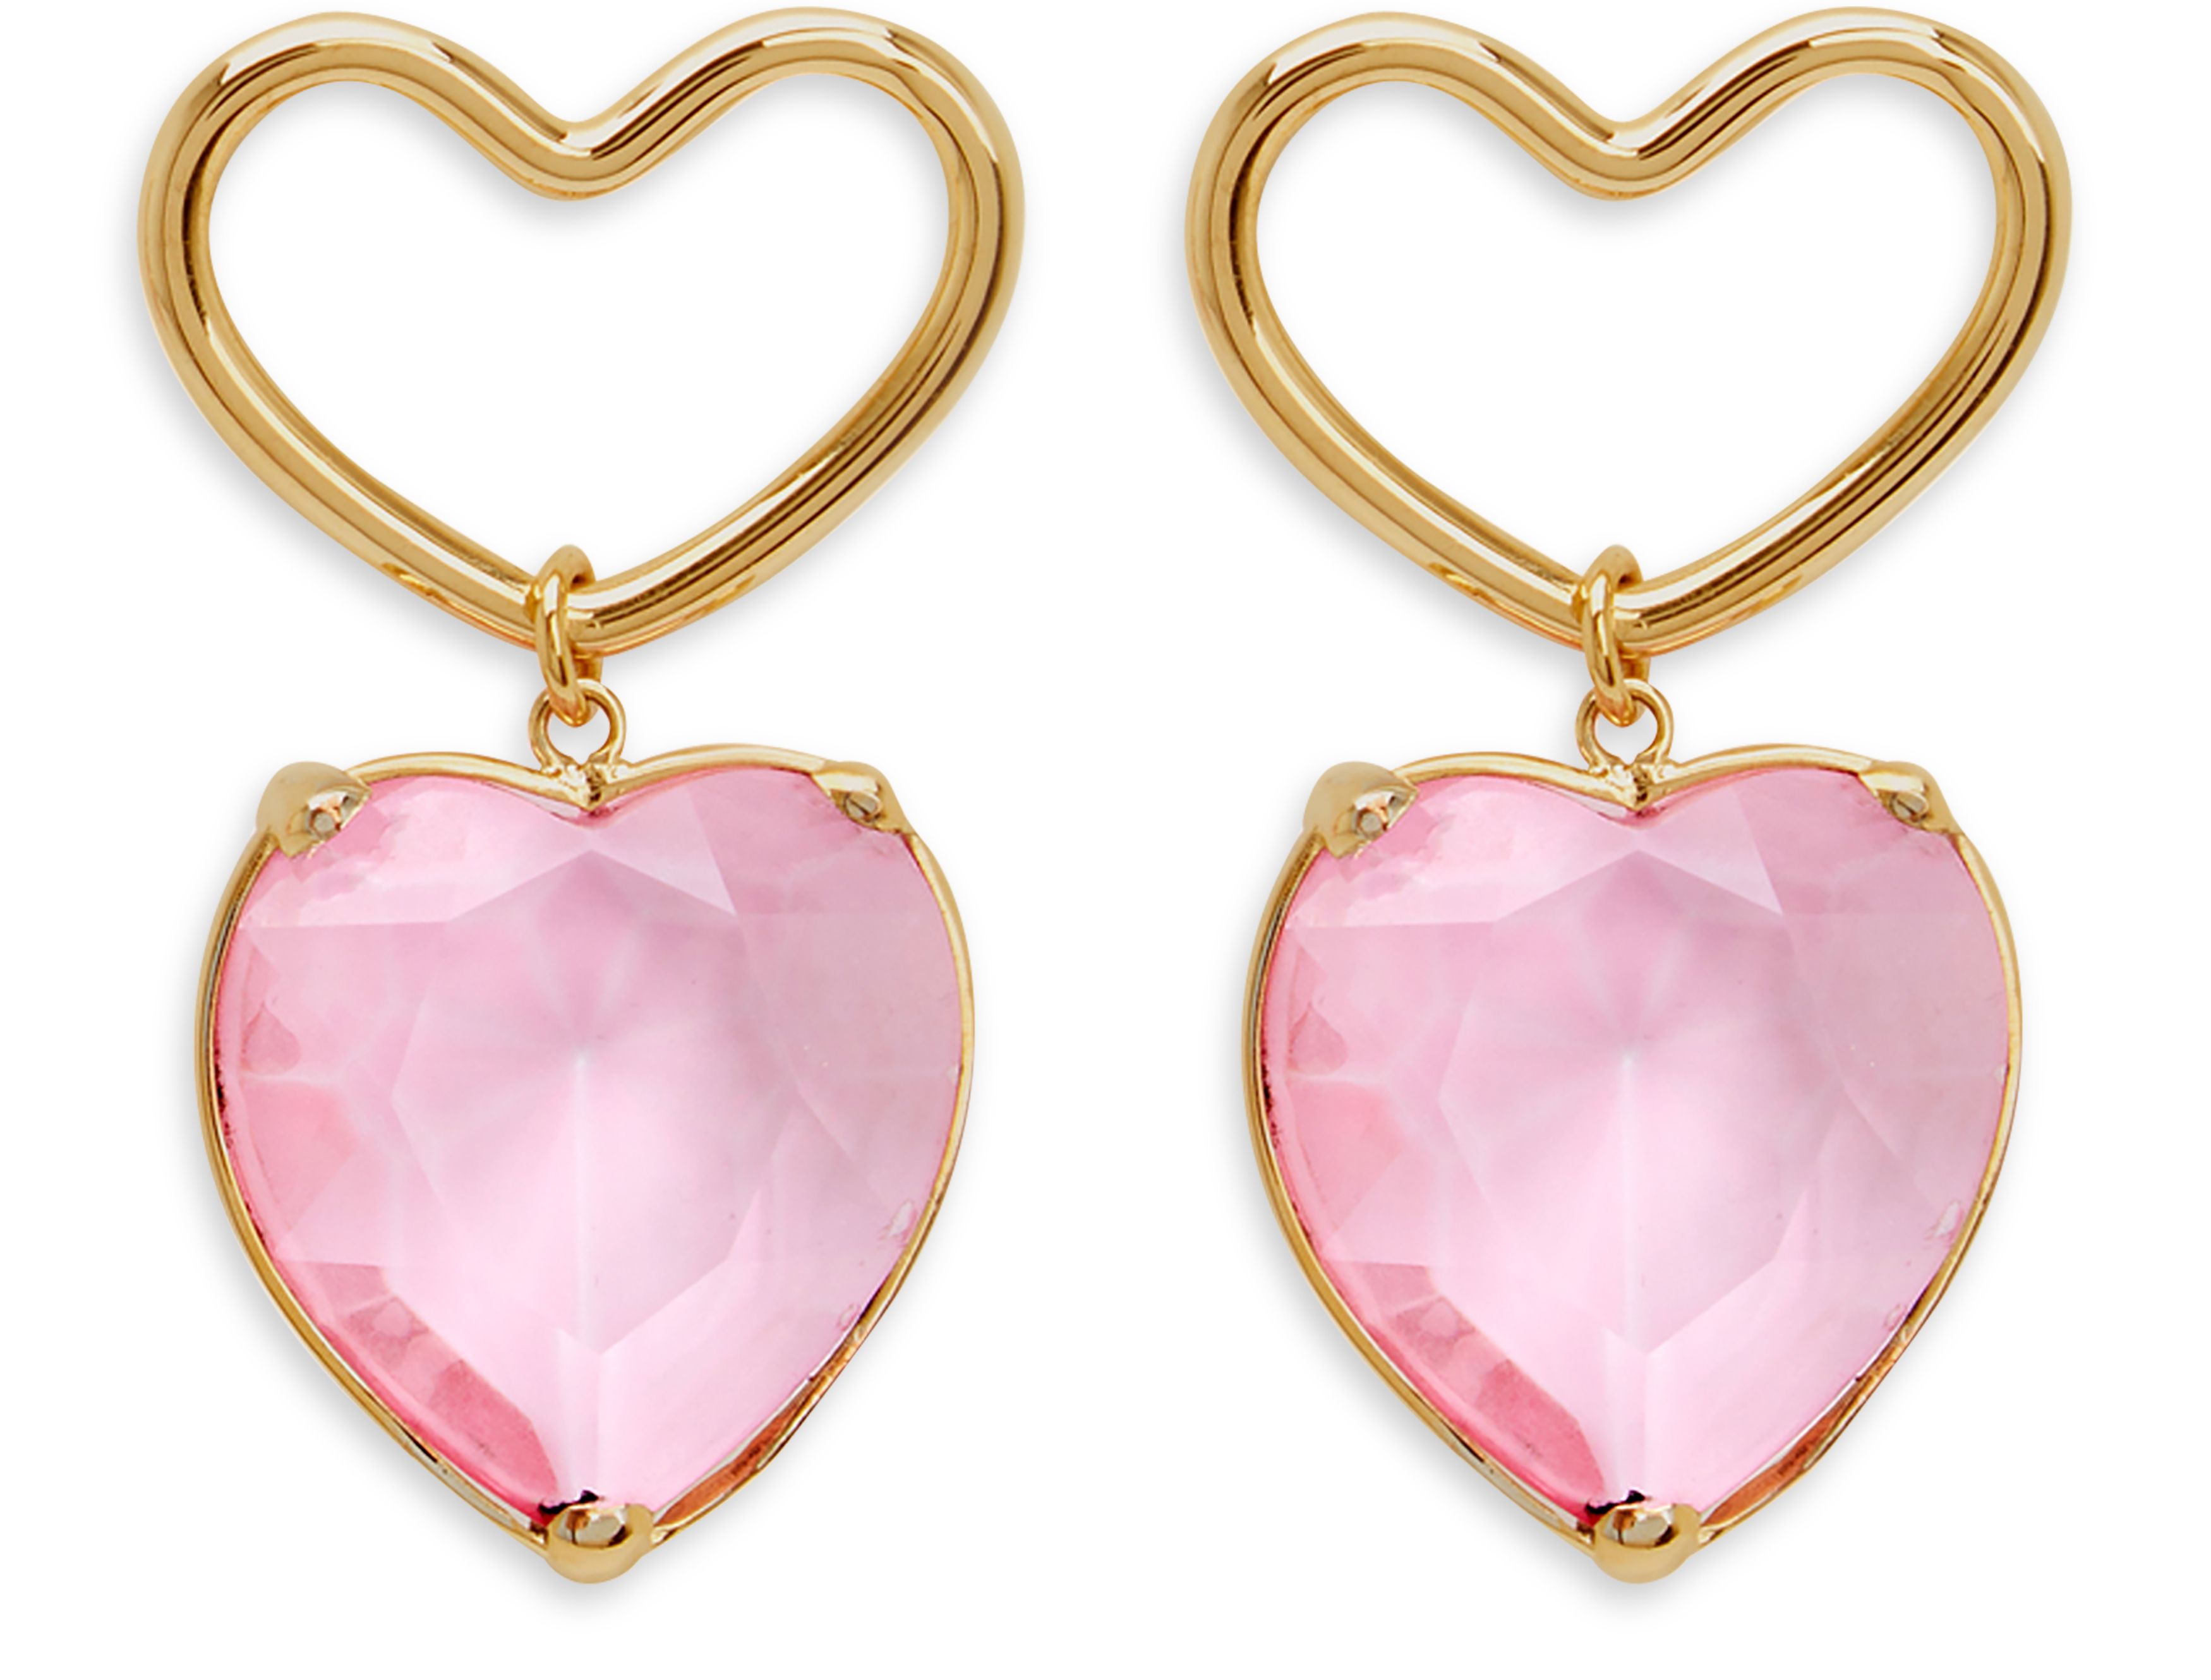 Nina Ricci Heart pendant earrings